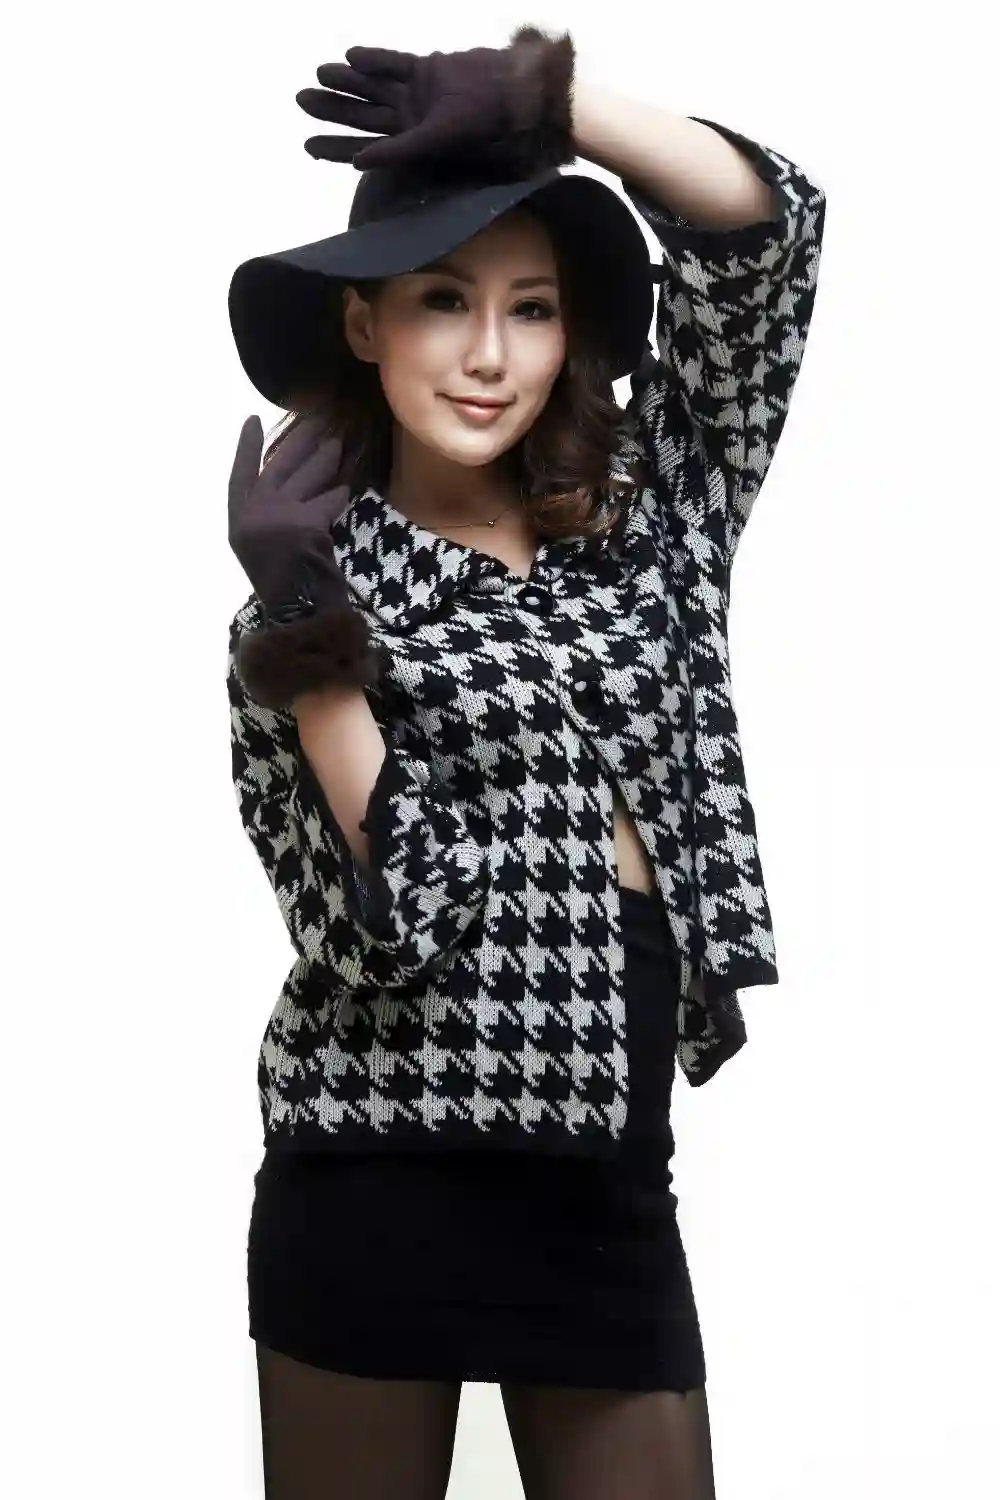 Korean lady wearing a black hat